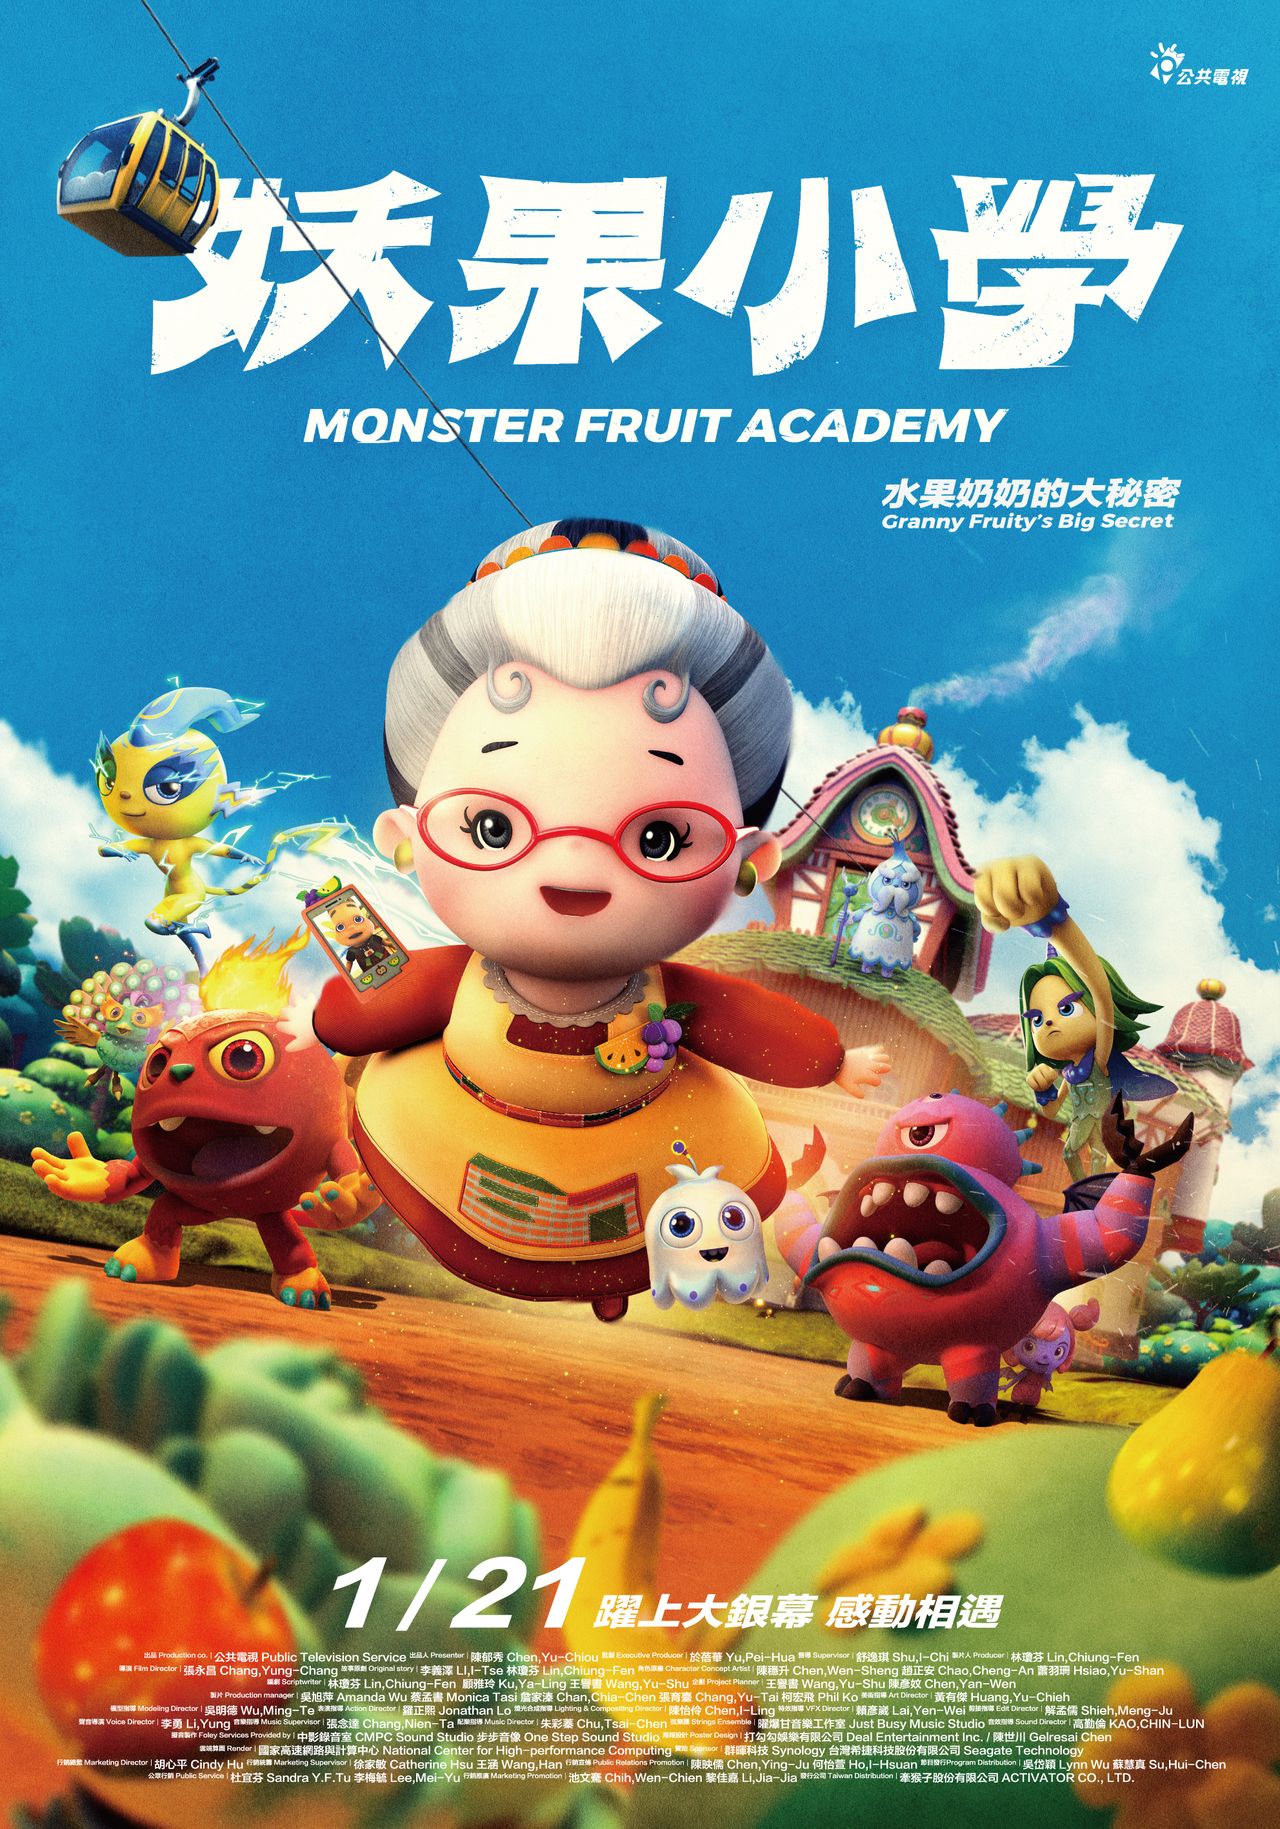 Monster Fruit Academy-Granny Fruity's big secret